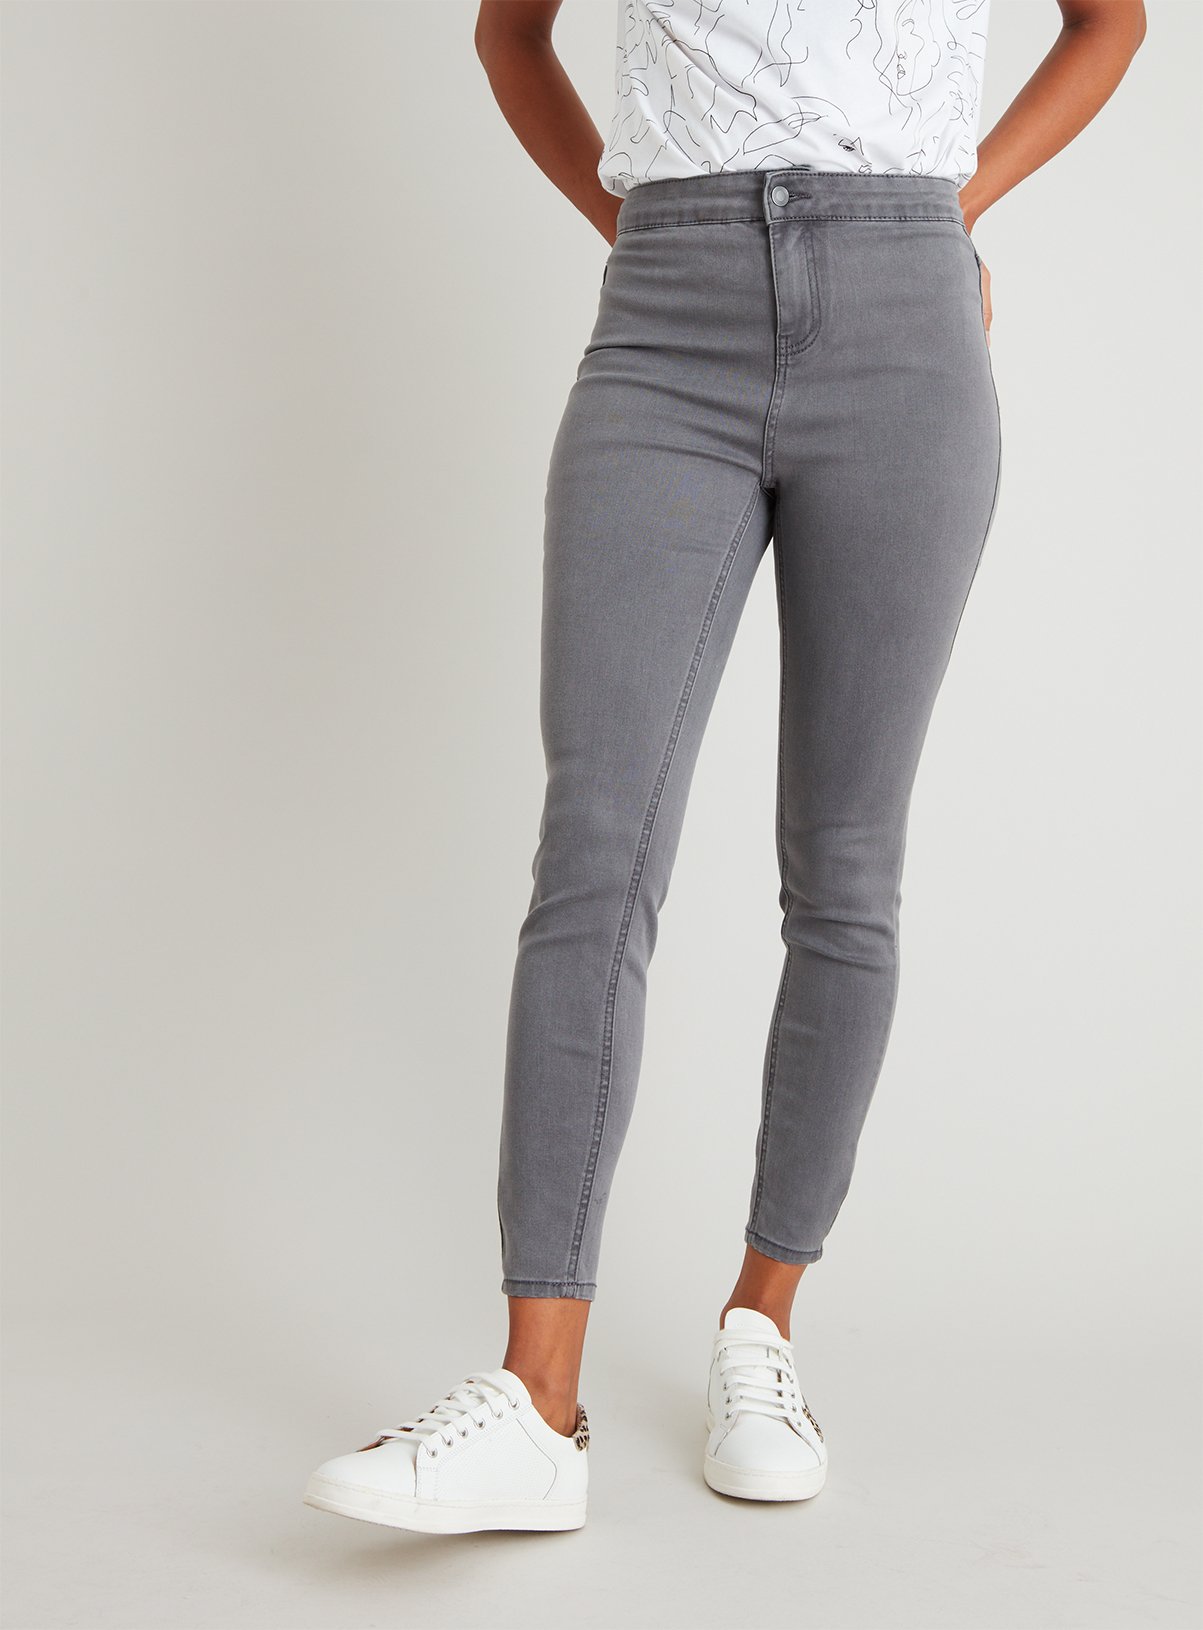 grey skinny jeans high waisted